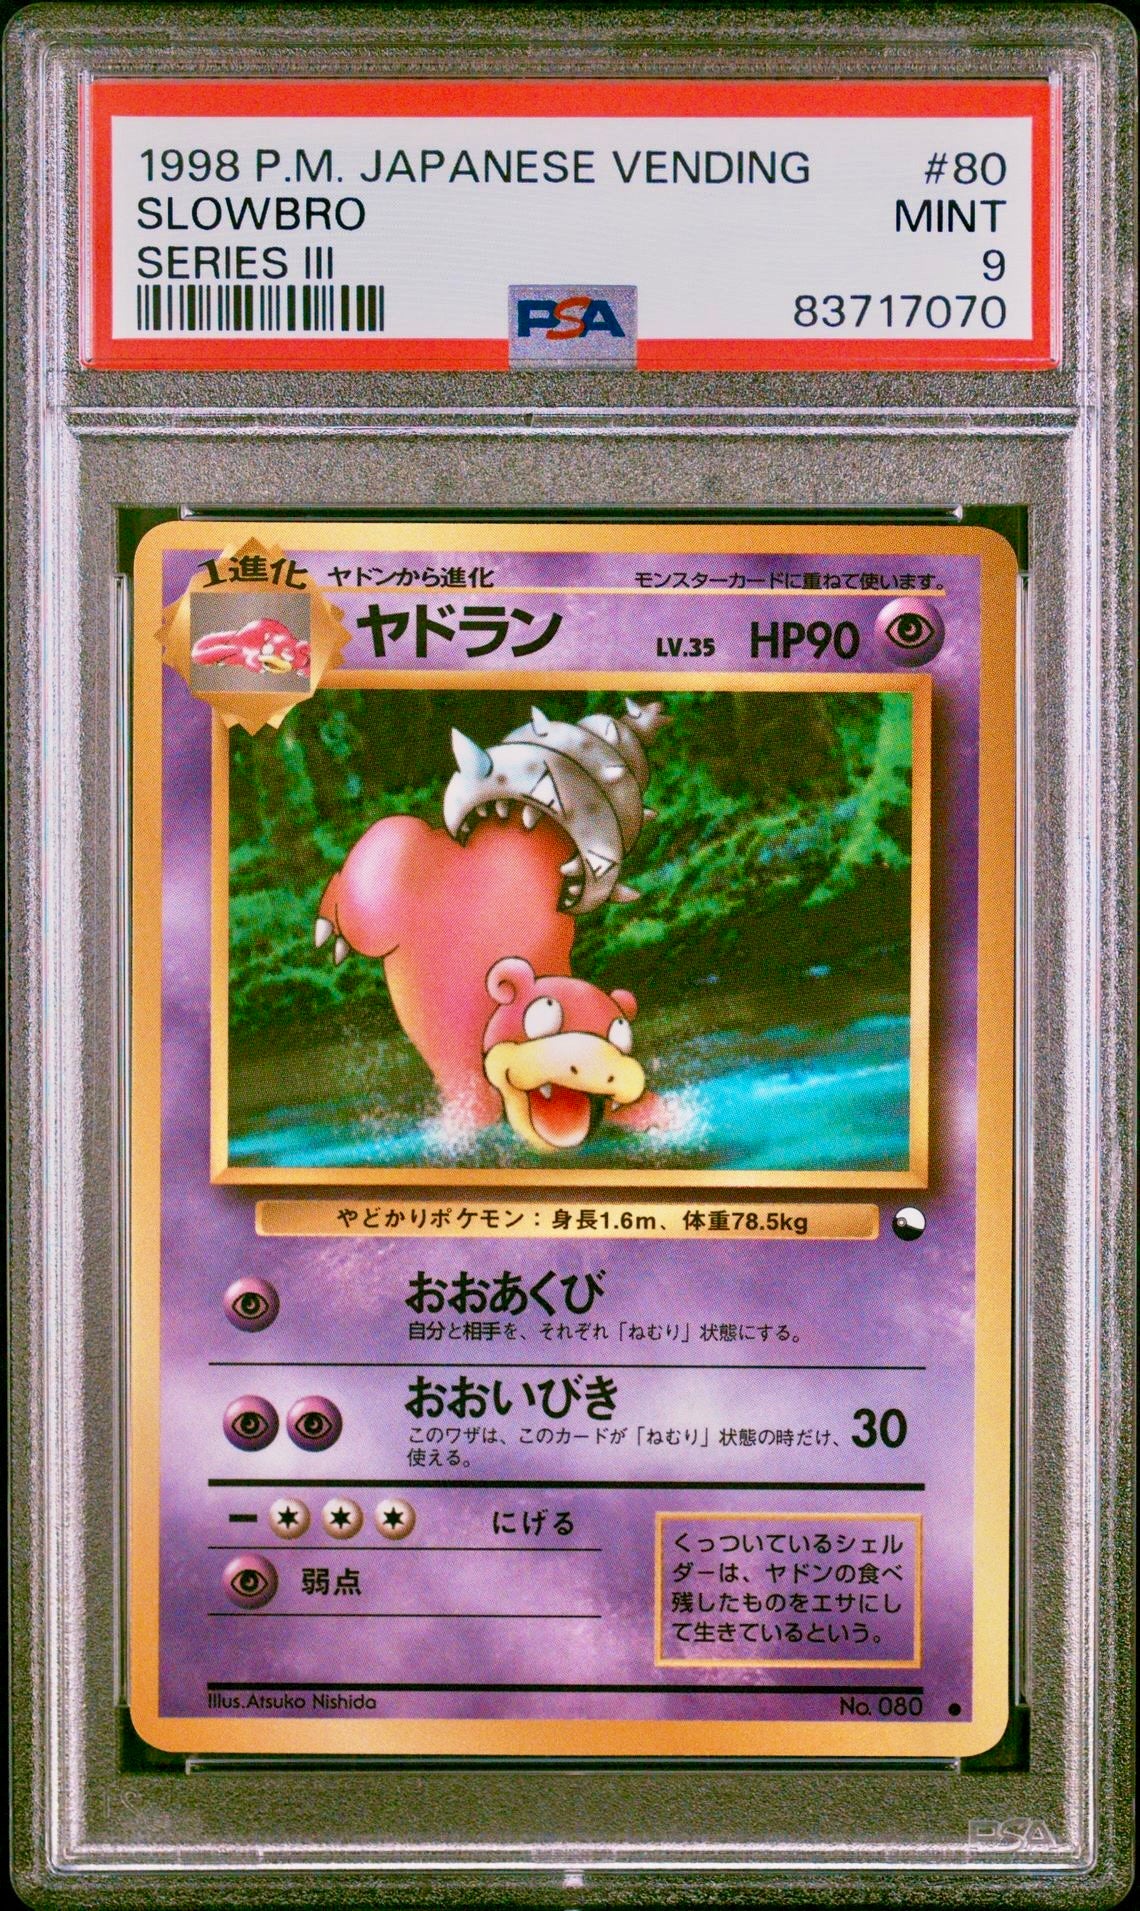 PSA 9 - Slowbro #80 Japanese Vending Series 3 - Pokemon